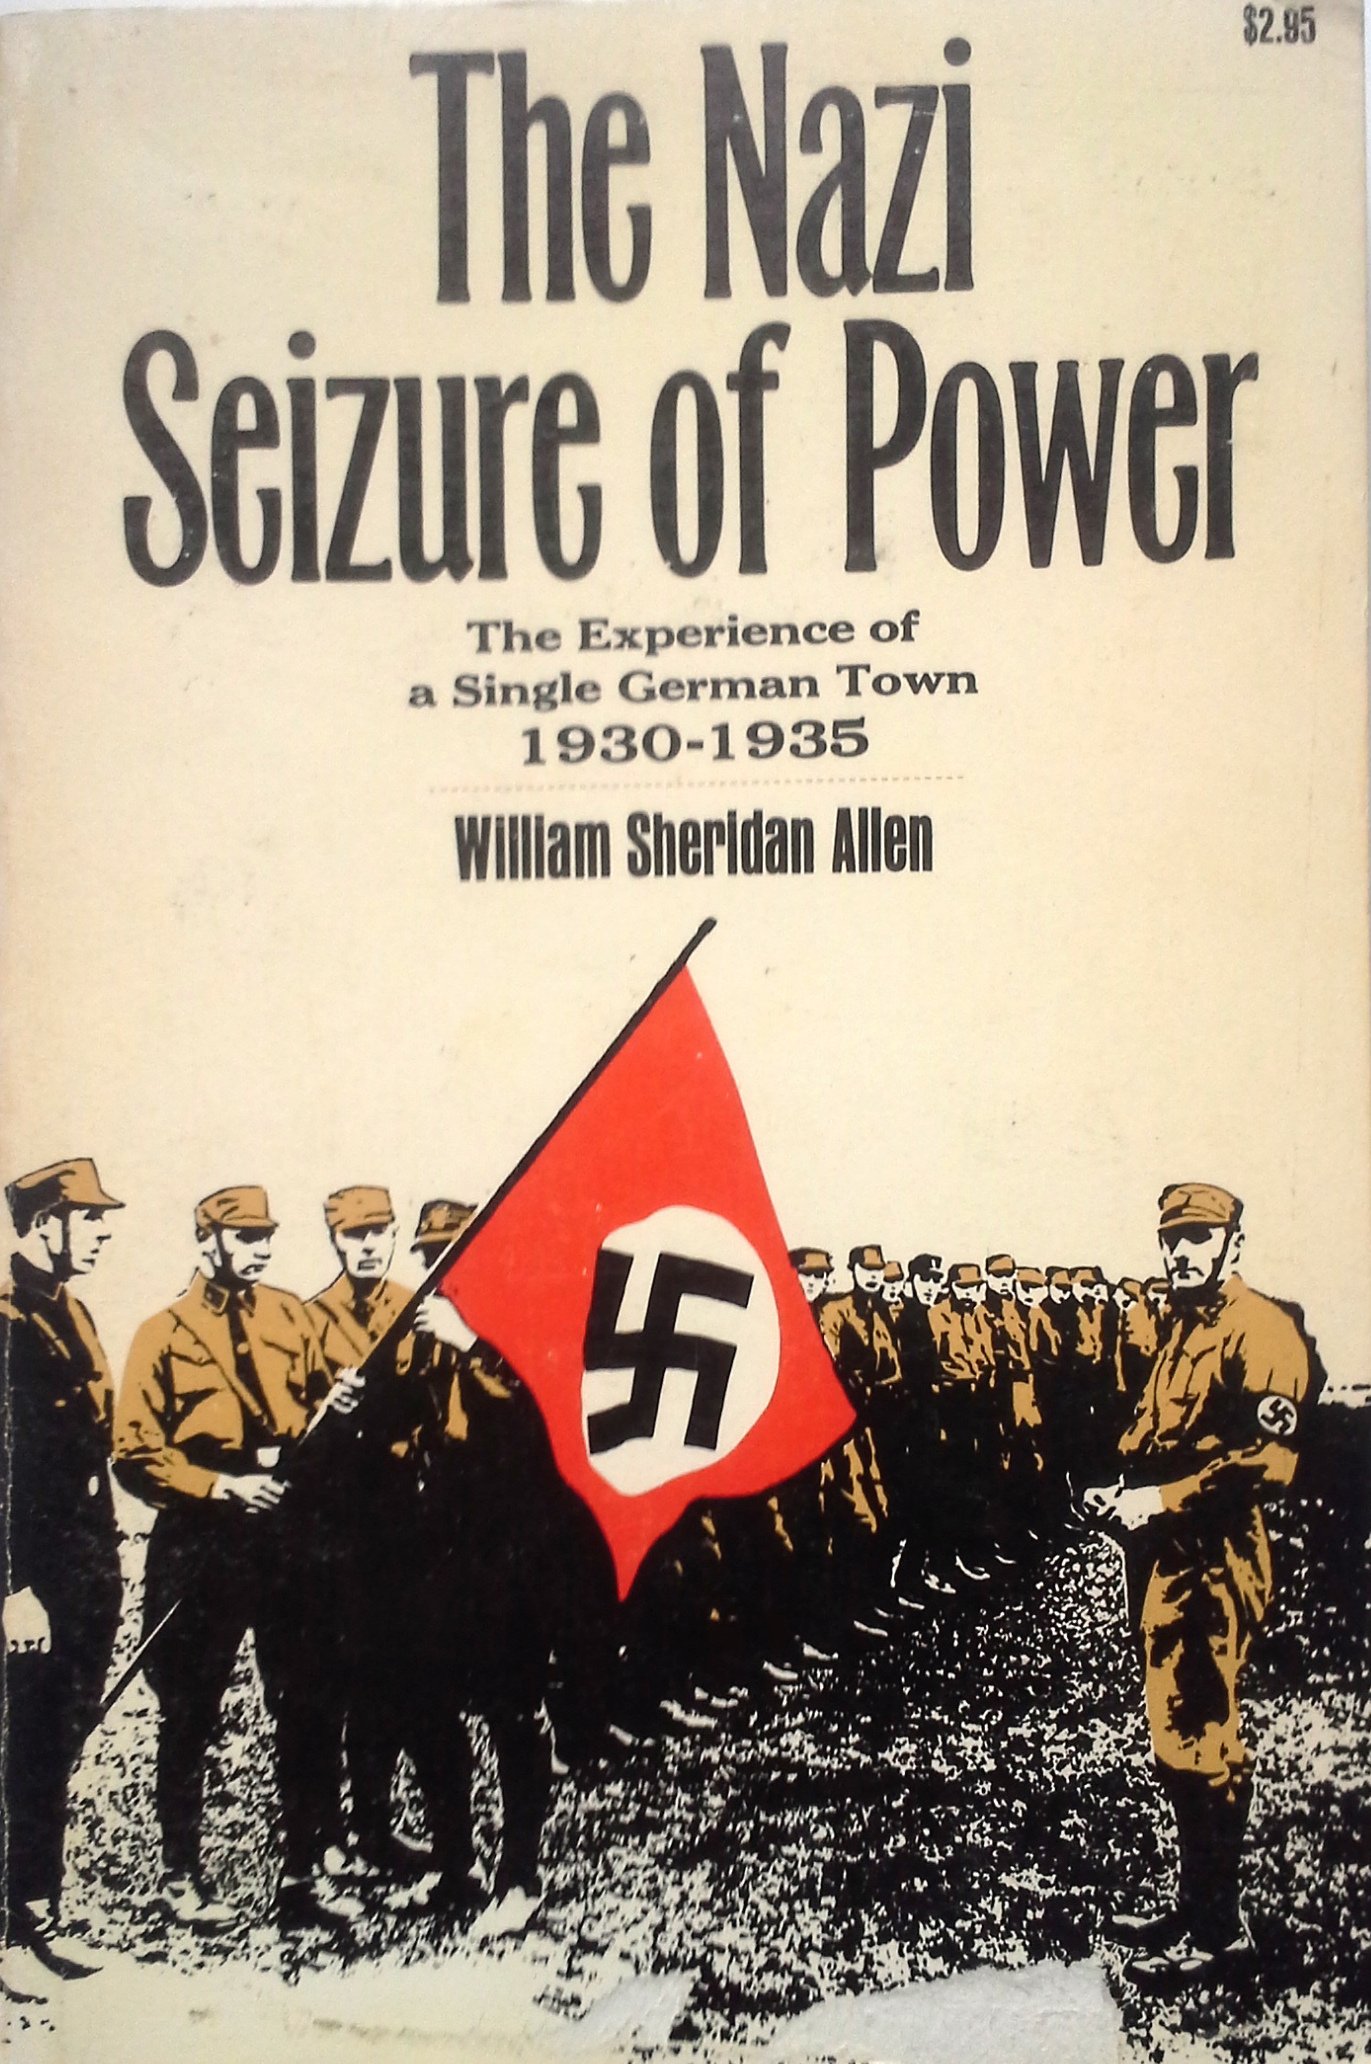 The Nazi seizure of power